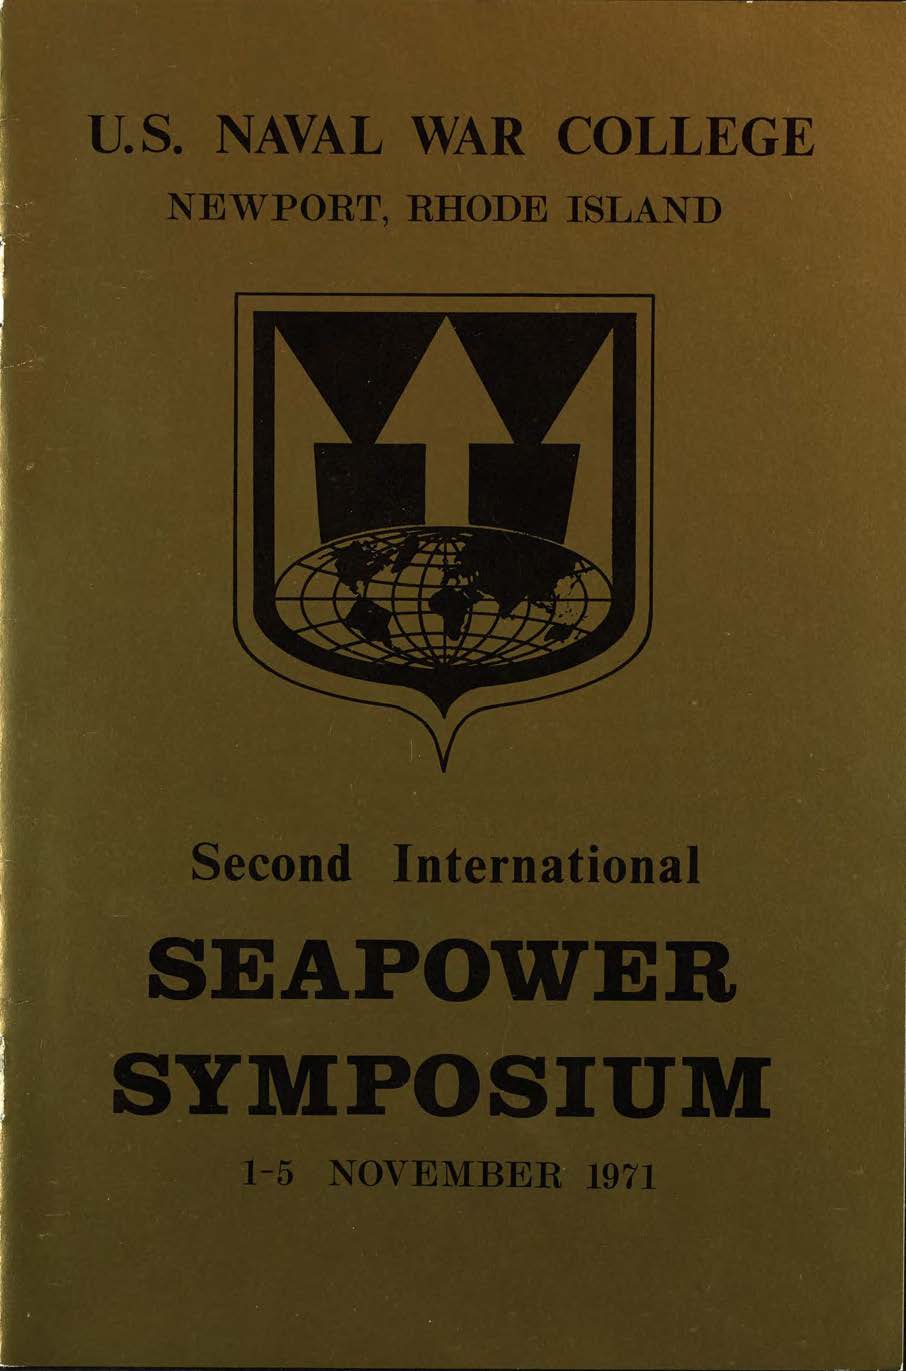 Second International Seapower Symposium information guide